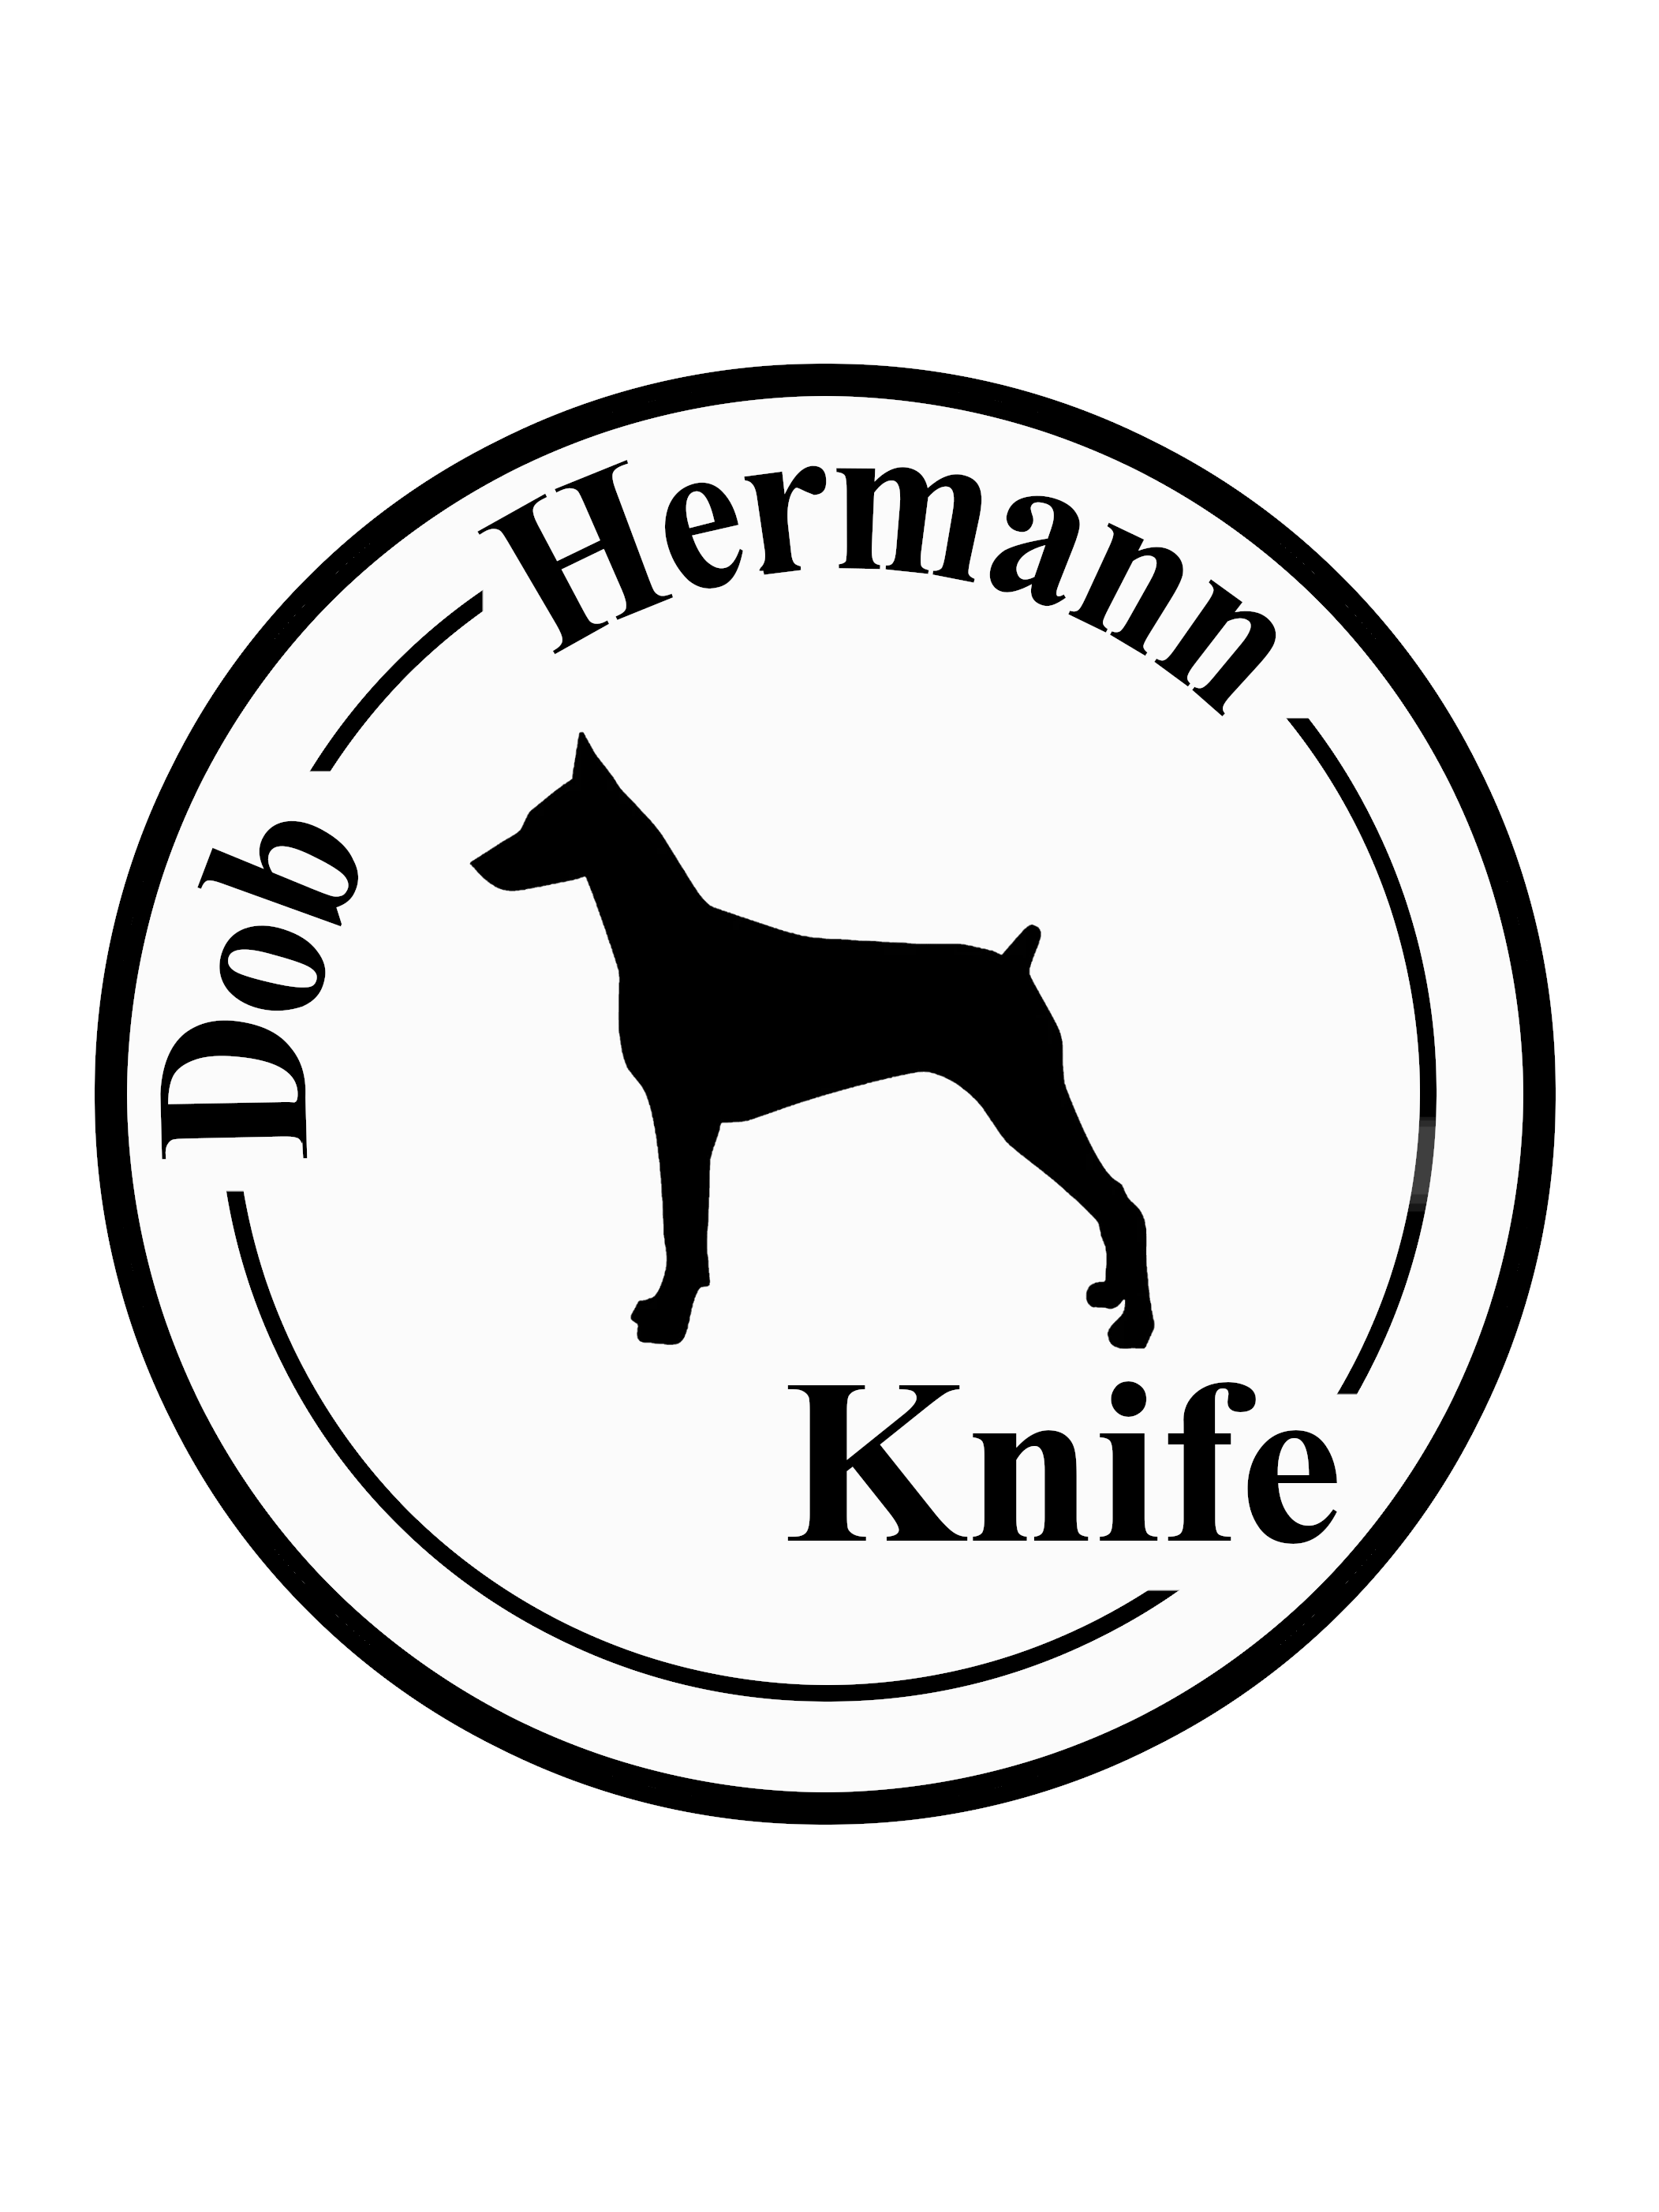 Dob Hermann Knife